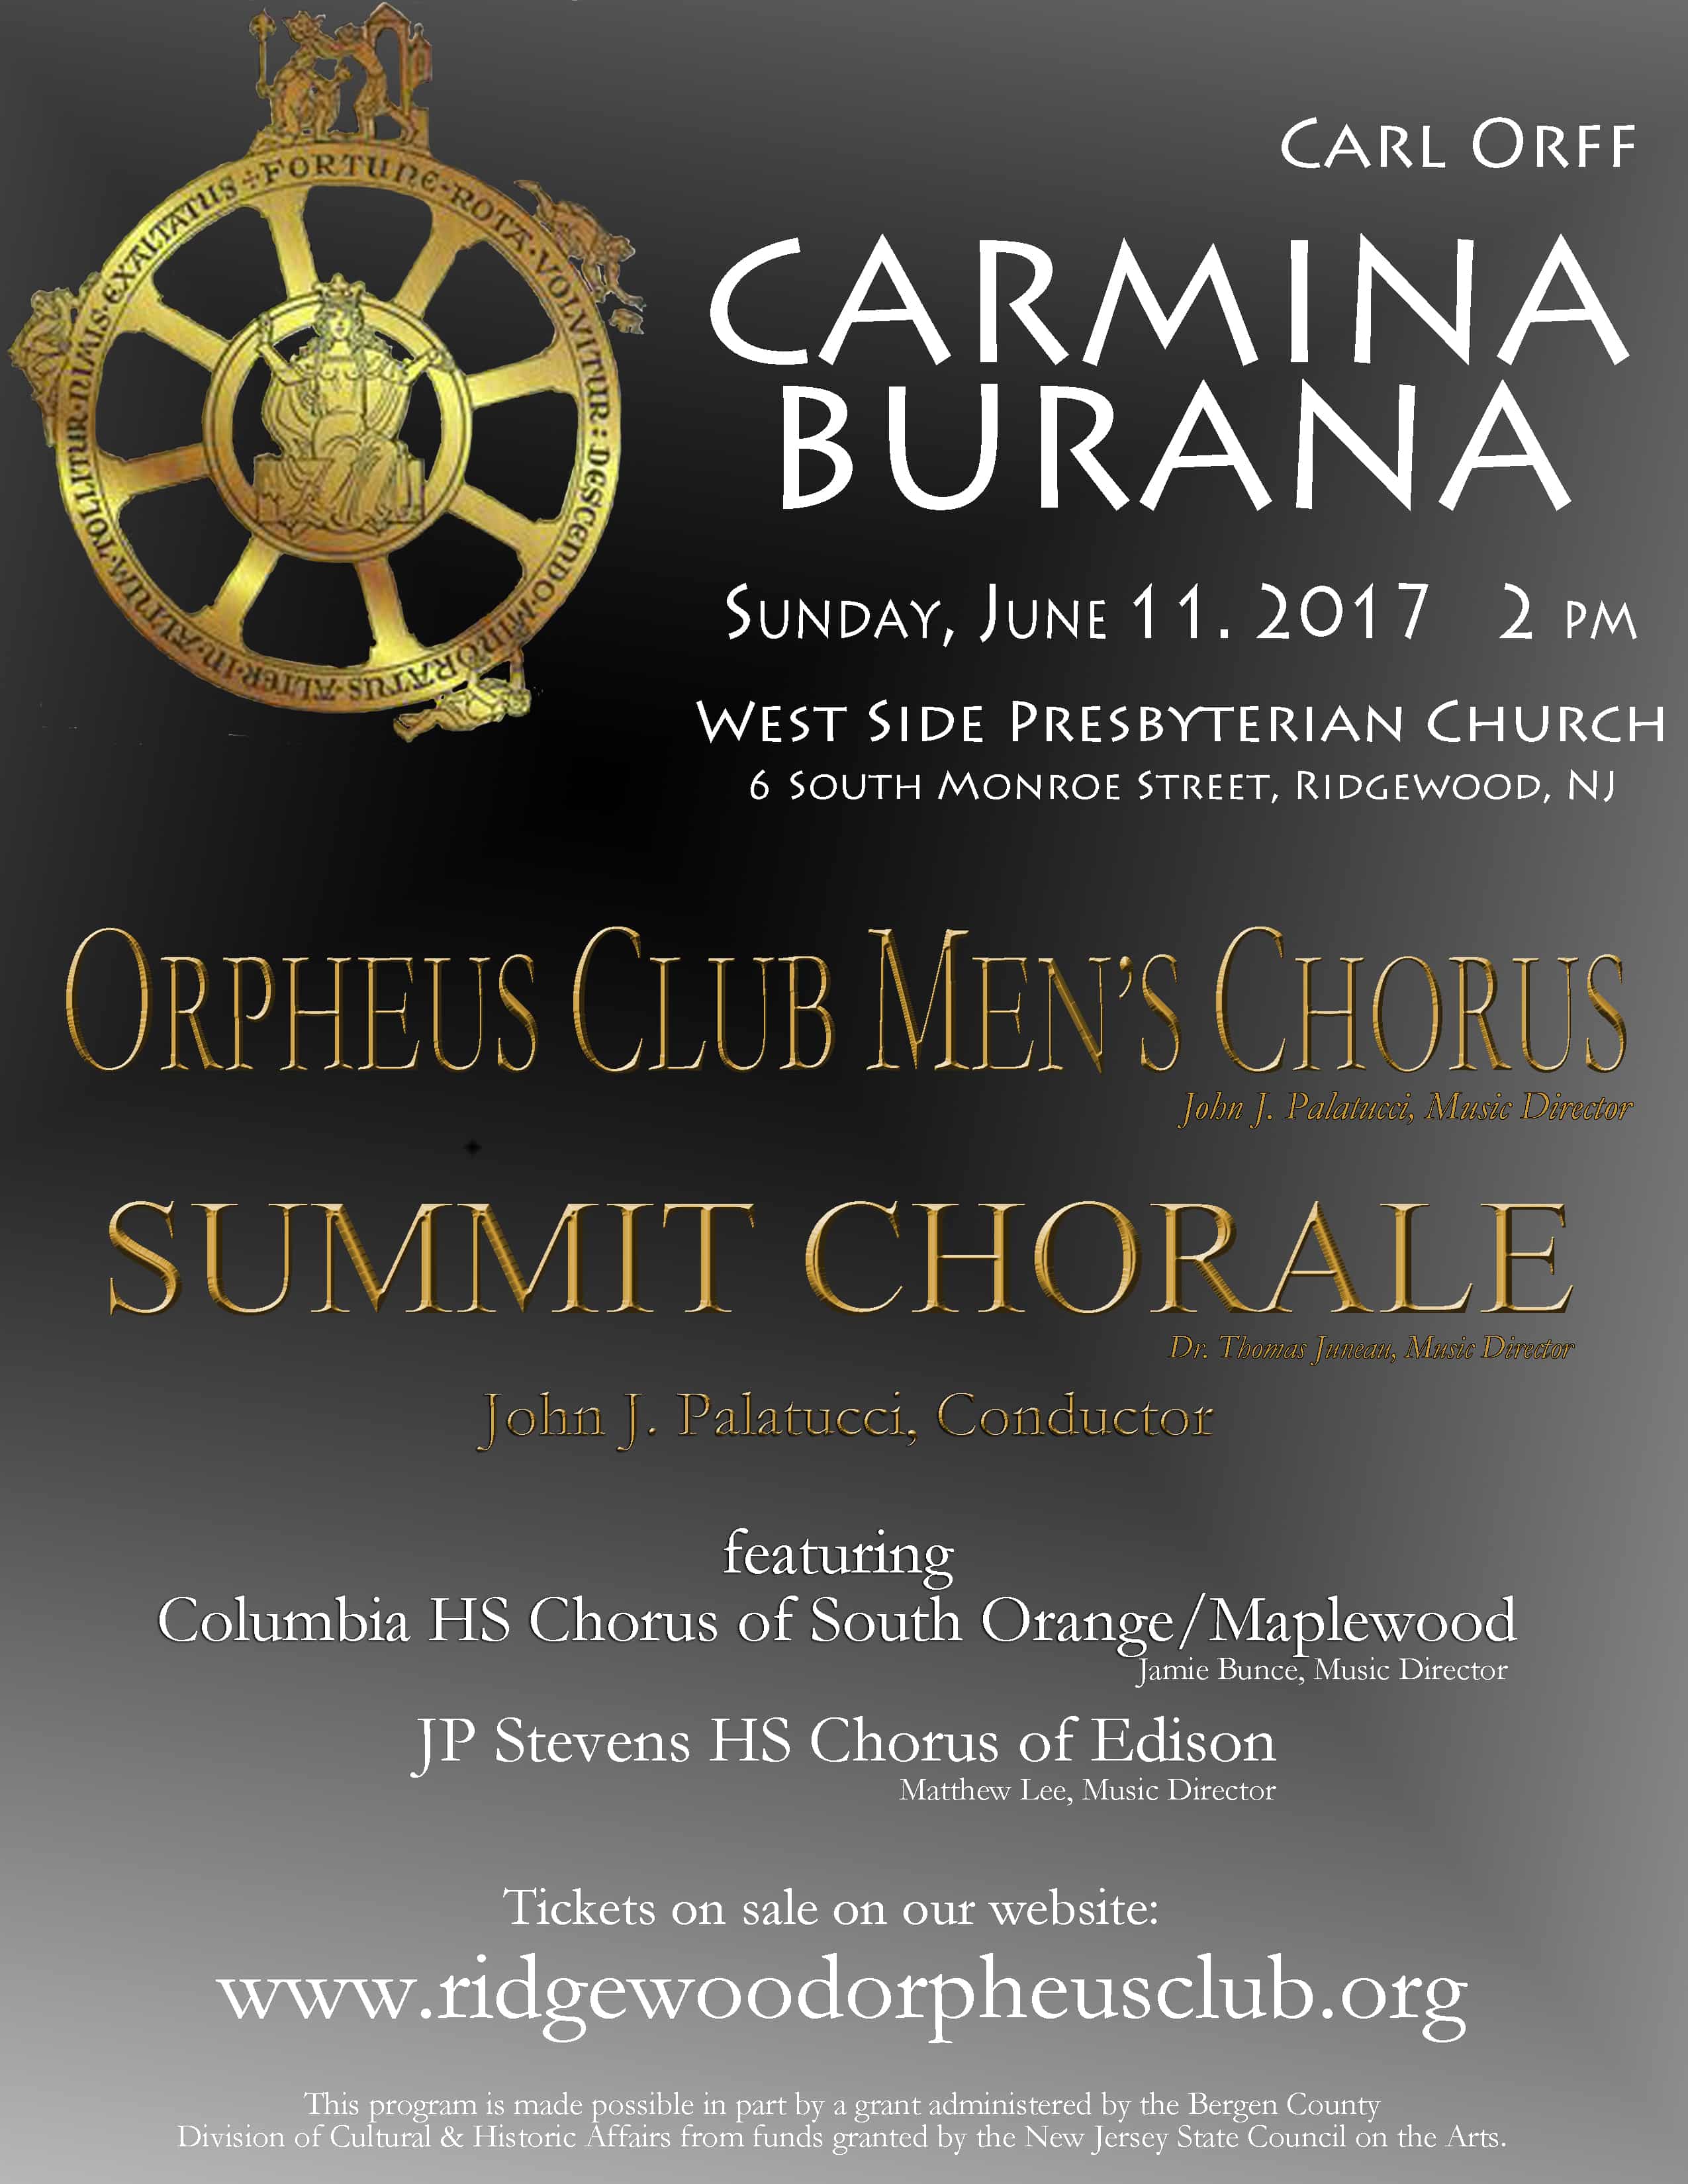 Orpheus Club Men’s Chorus Presents Choral Spectacular “Carmina Burana”